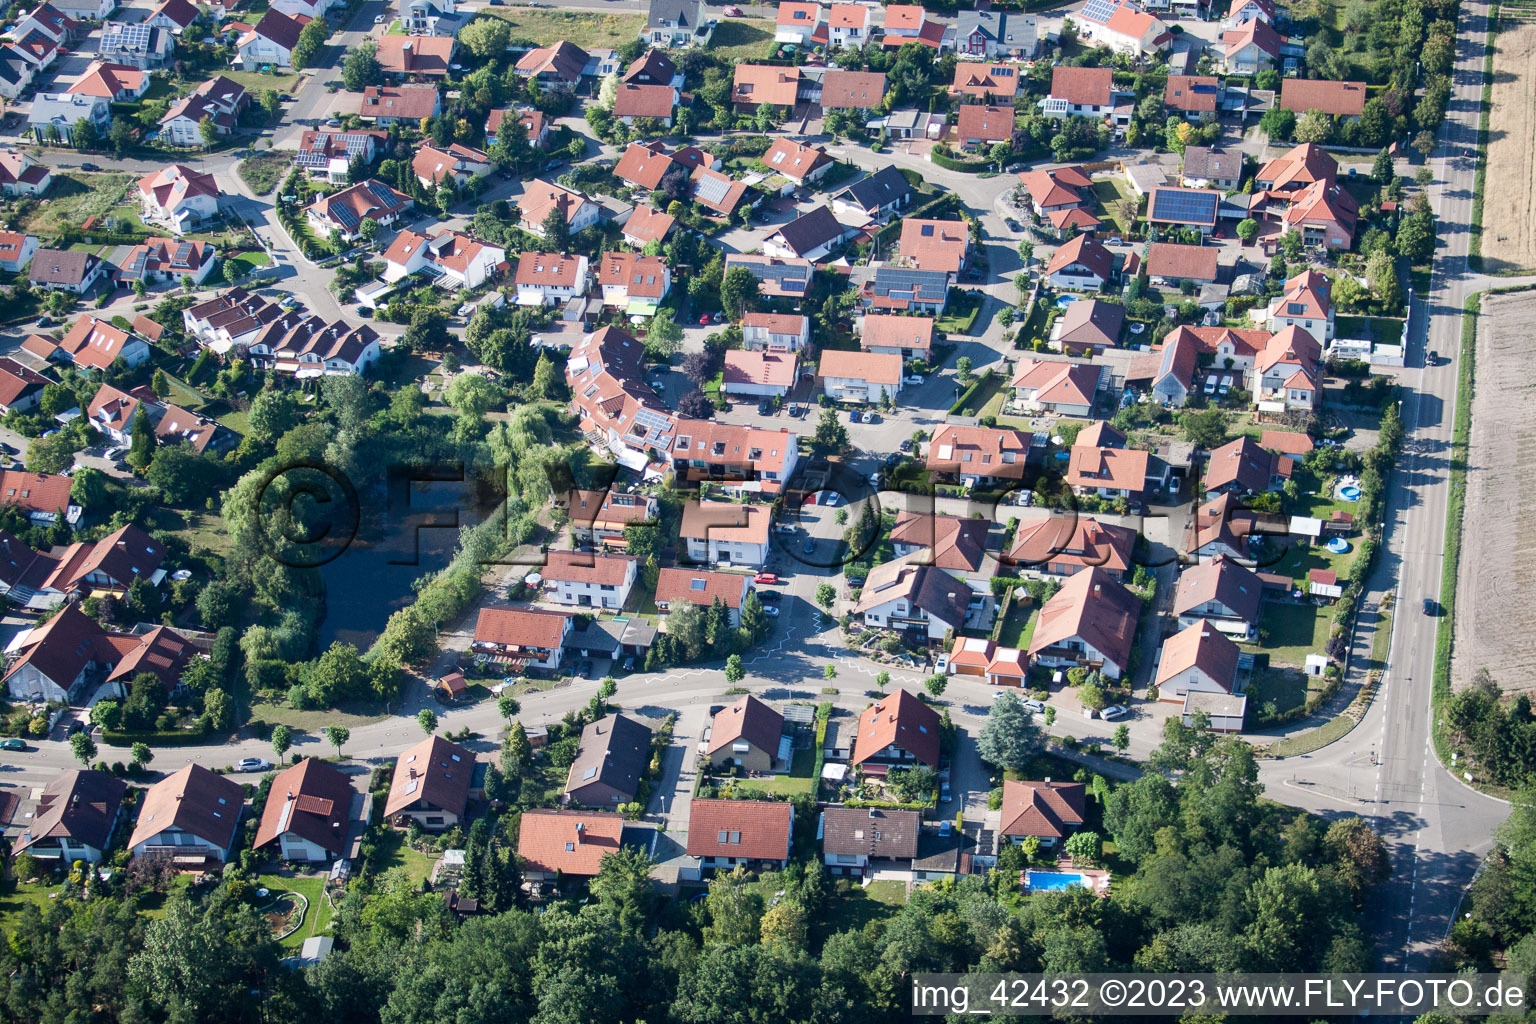 Aerial view of New development area in Rheinzabern in the state Rhineland-Palatinate, Germany